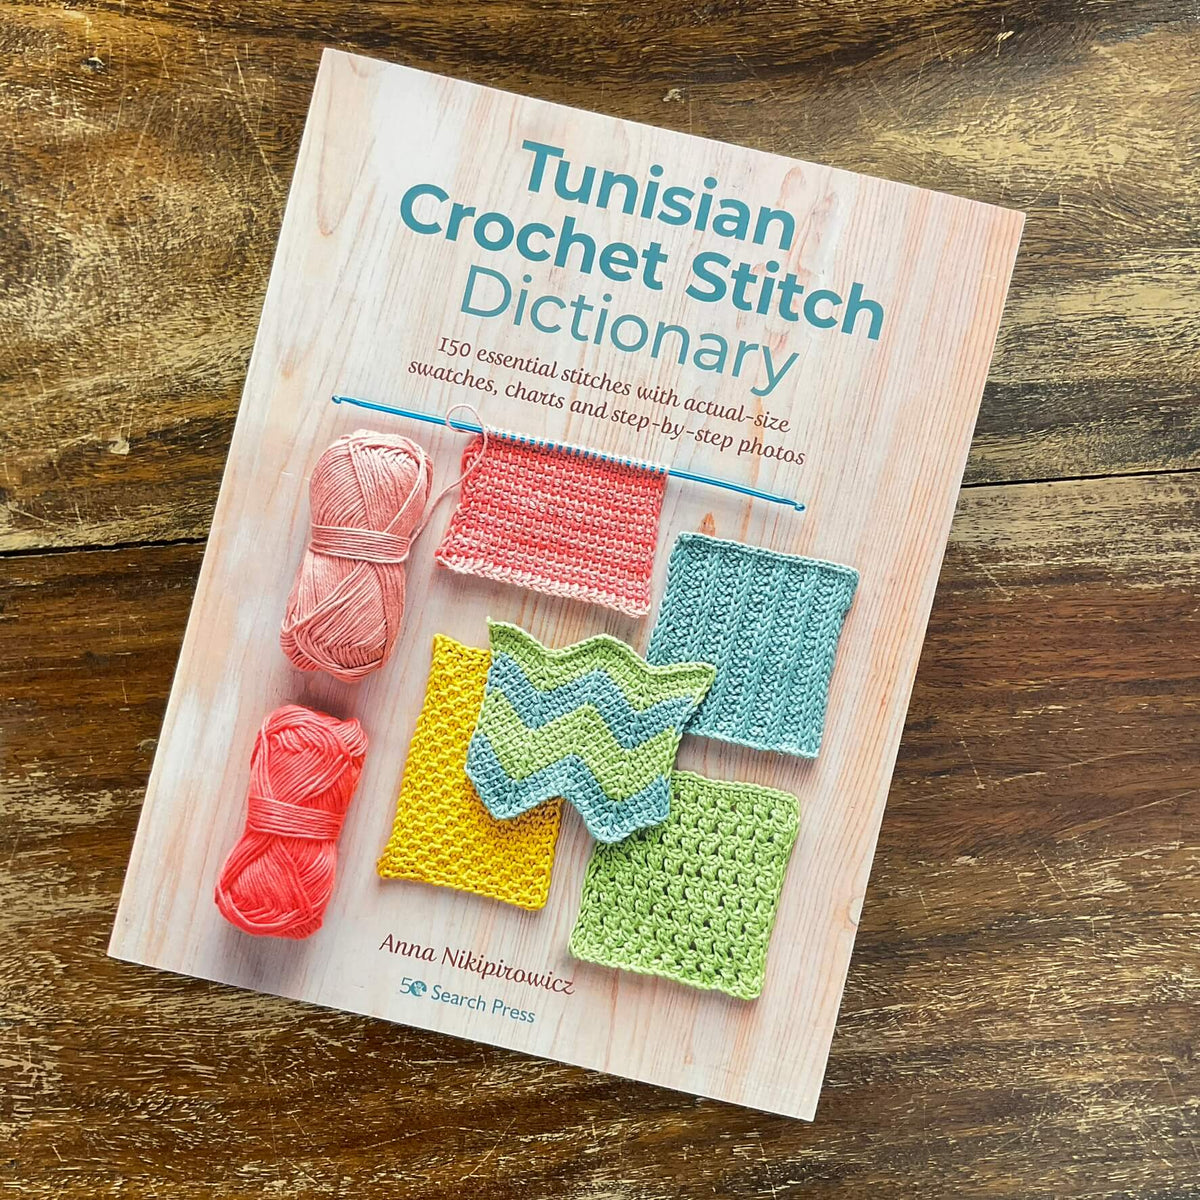  Tunisian Crochet Book